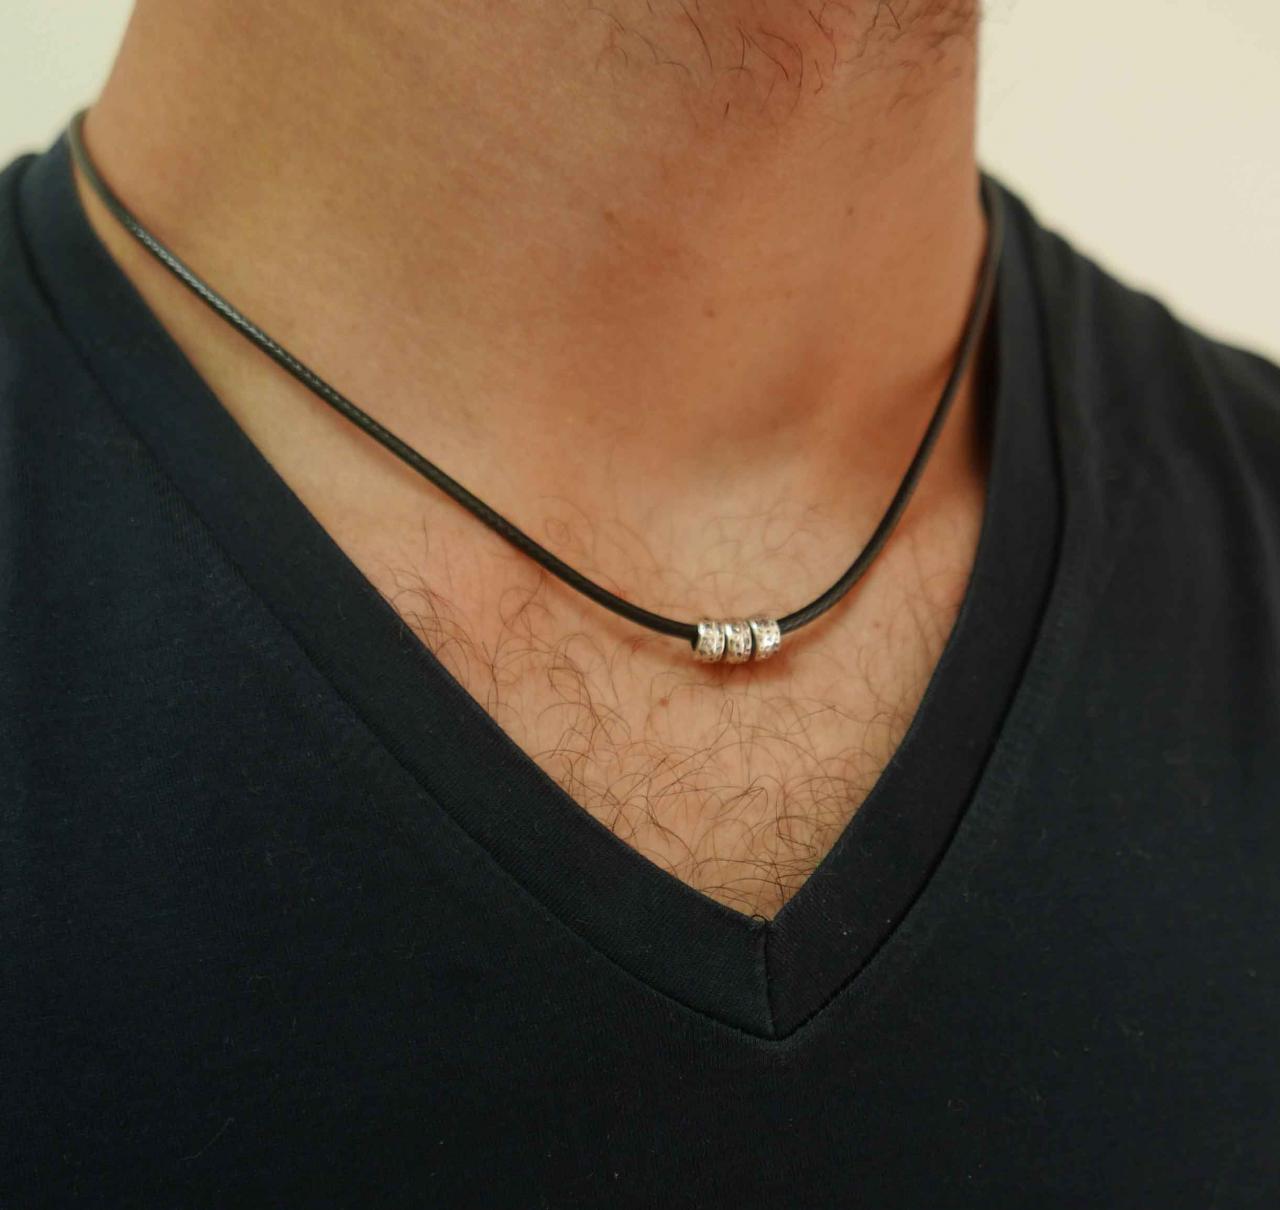 Men's Necklace - Men's Silver Necklace - Men's Beaded Necklace - Men's Jewelry - Men's Gift -